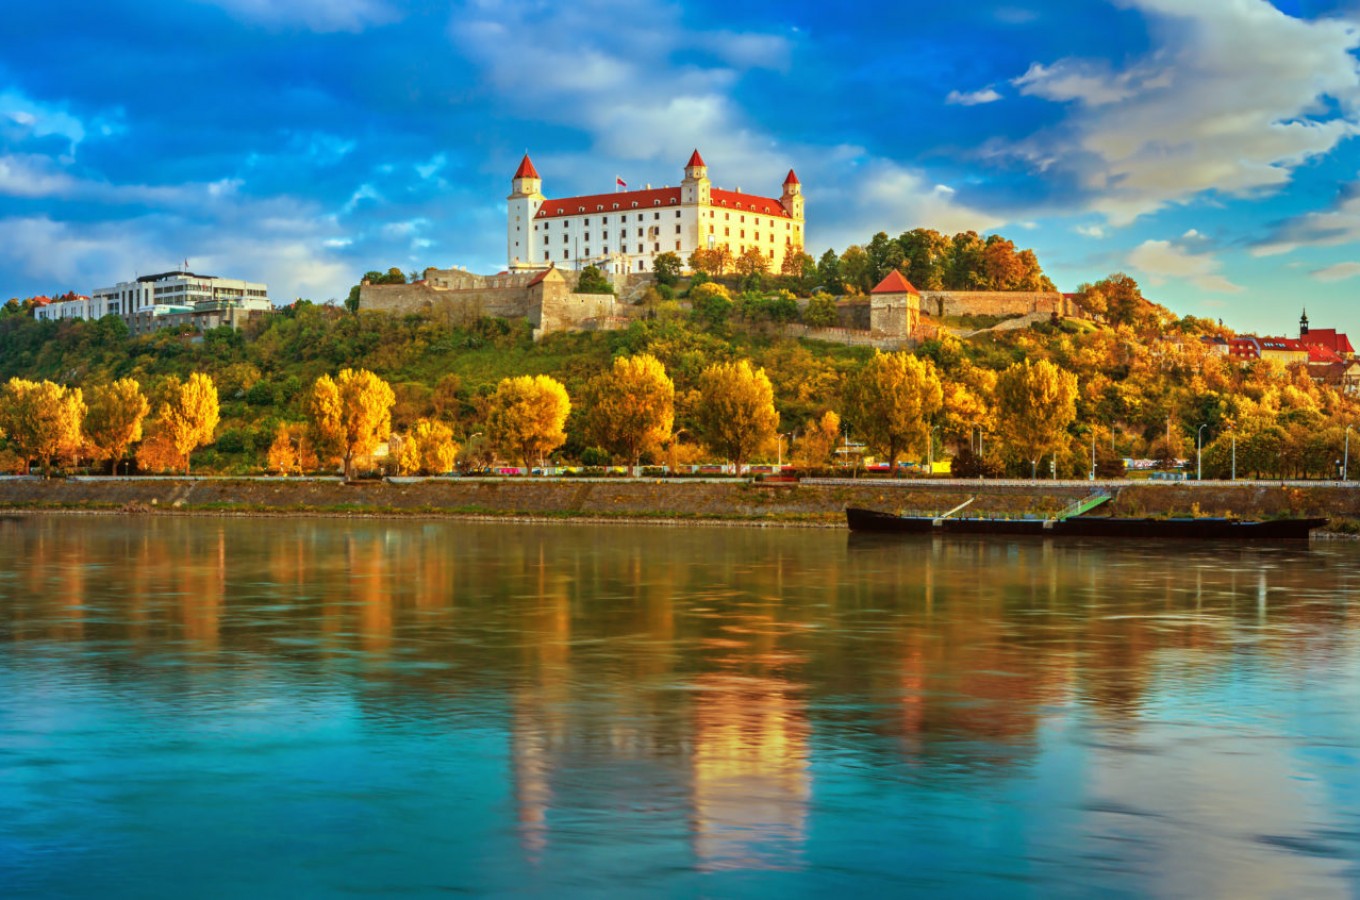 Bratislava castle and old town over the Danube river in Bratislava city, Slovakia